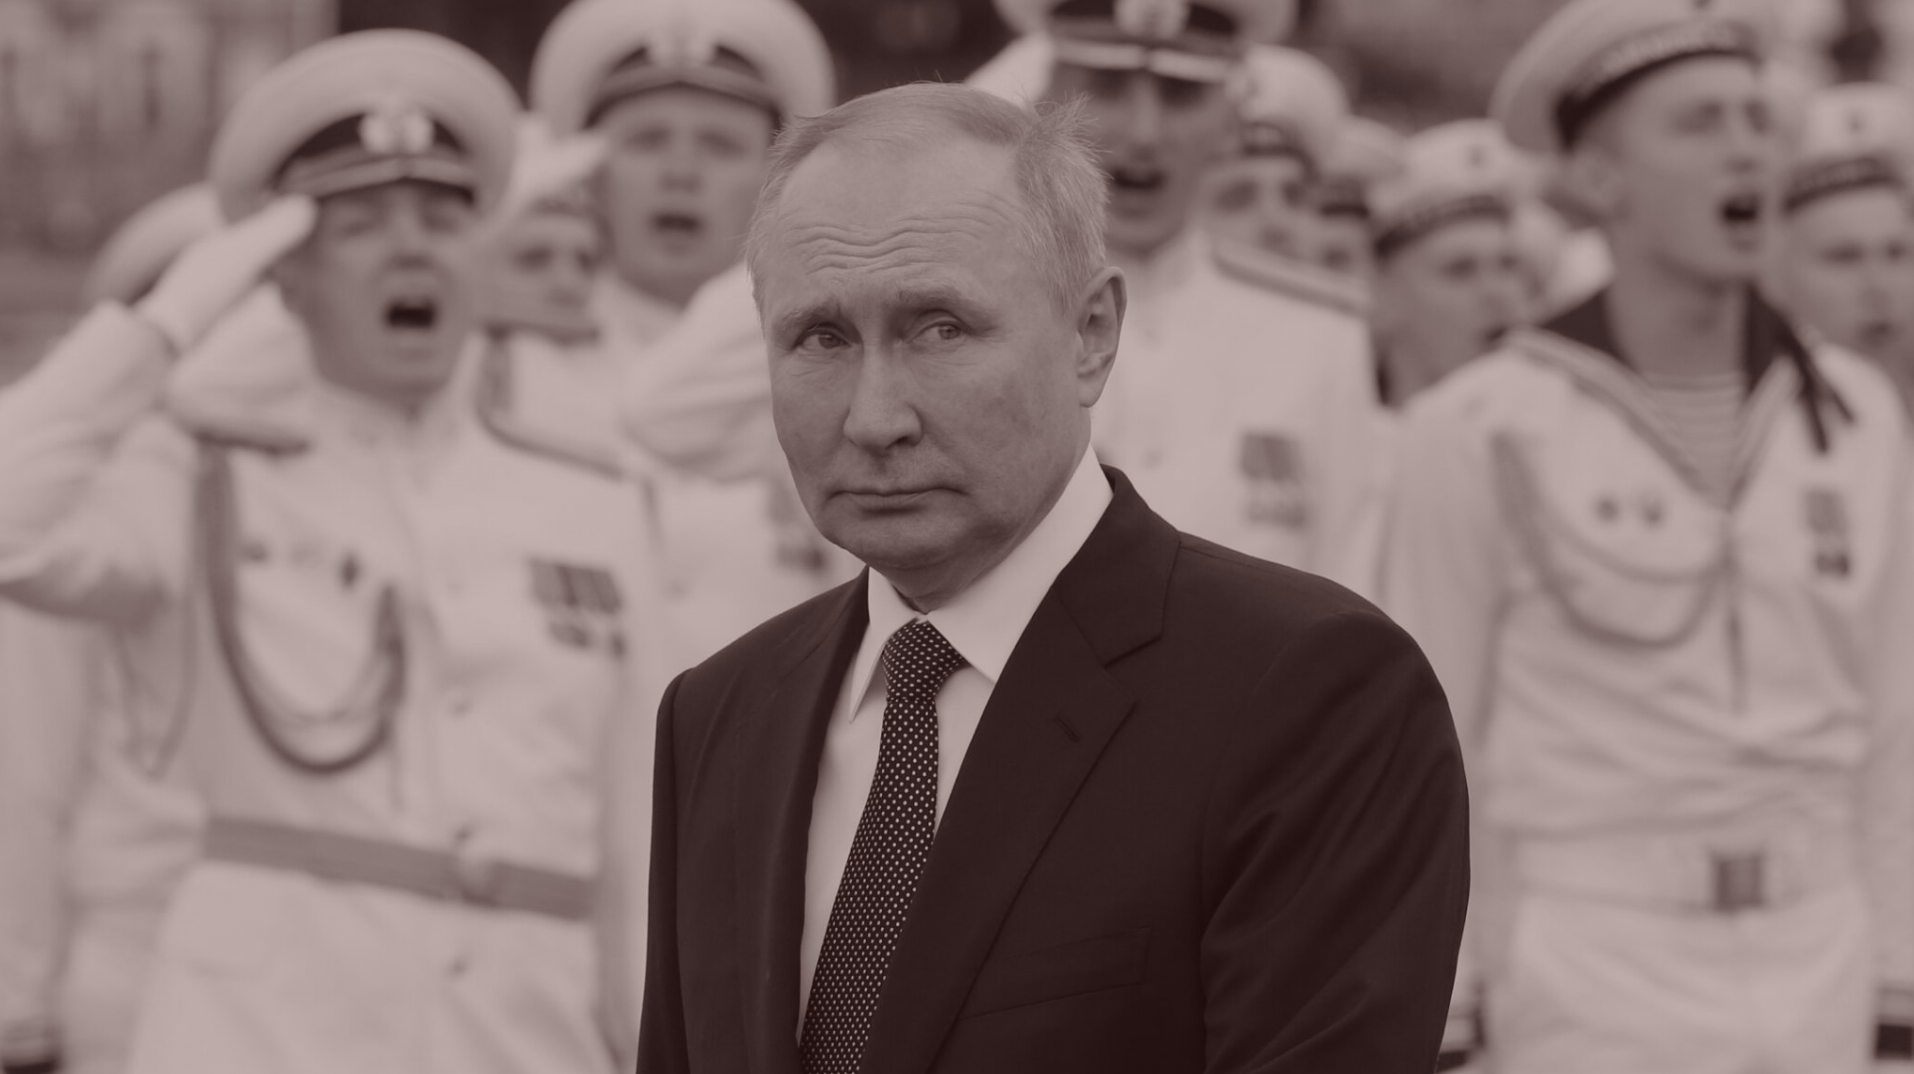 Putin’s Surprise Triumph of the Will